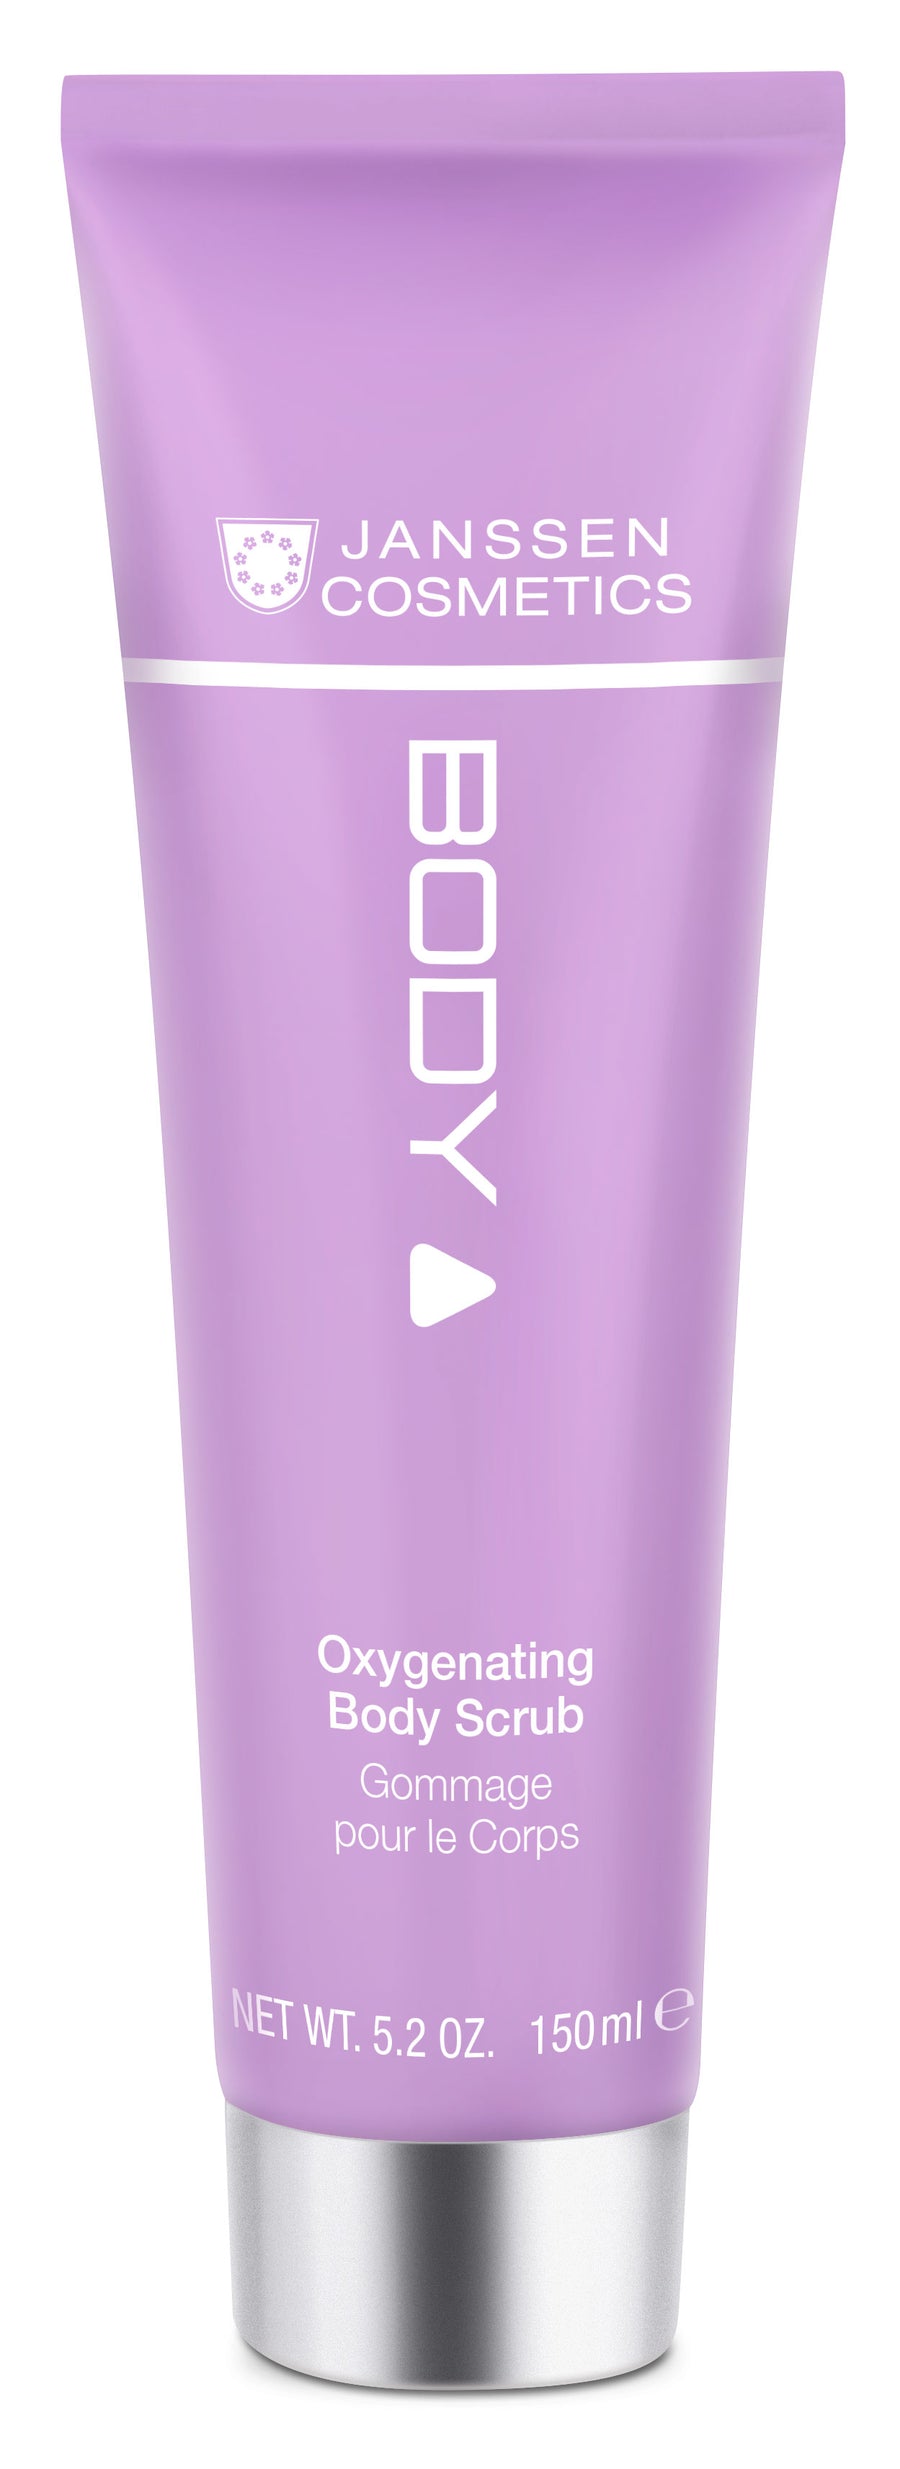 Oxygenating Body Scrub 150ml